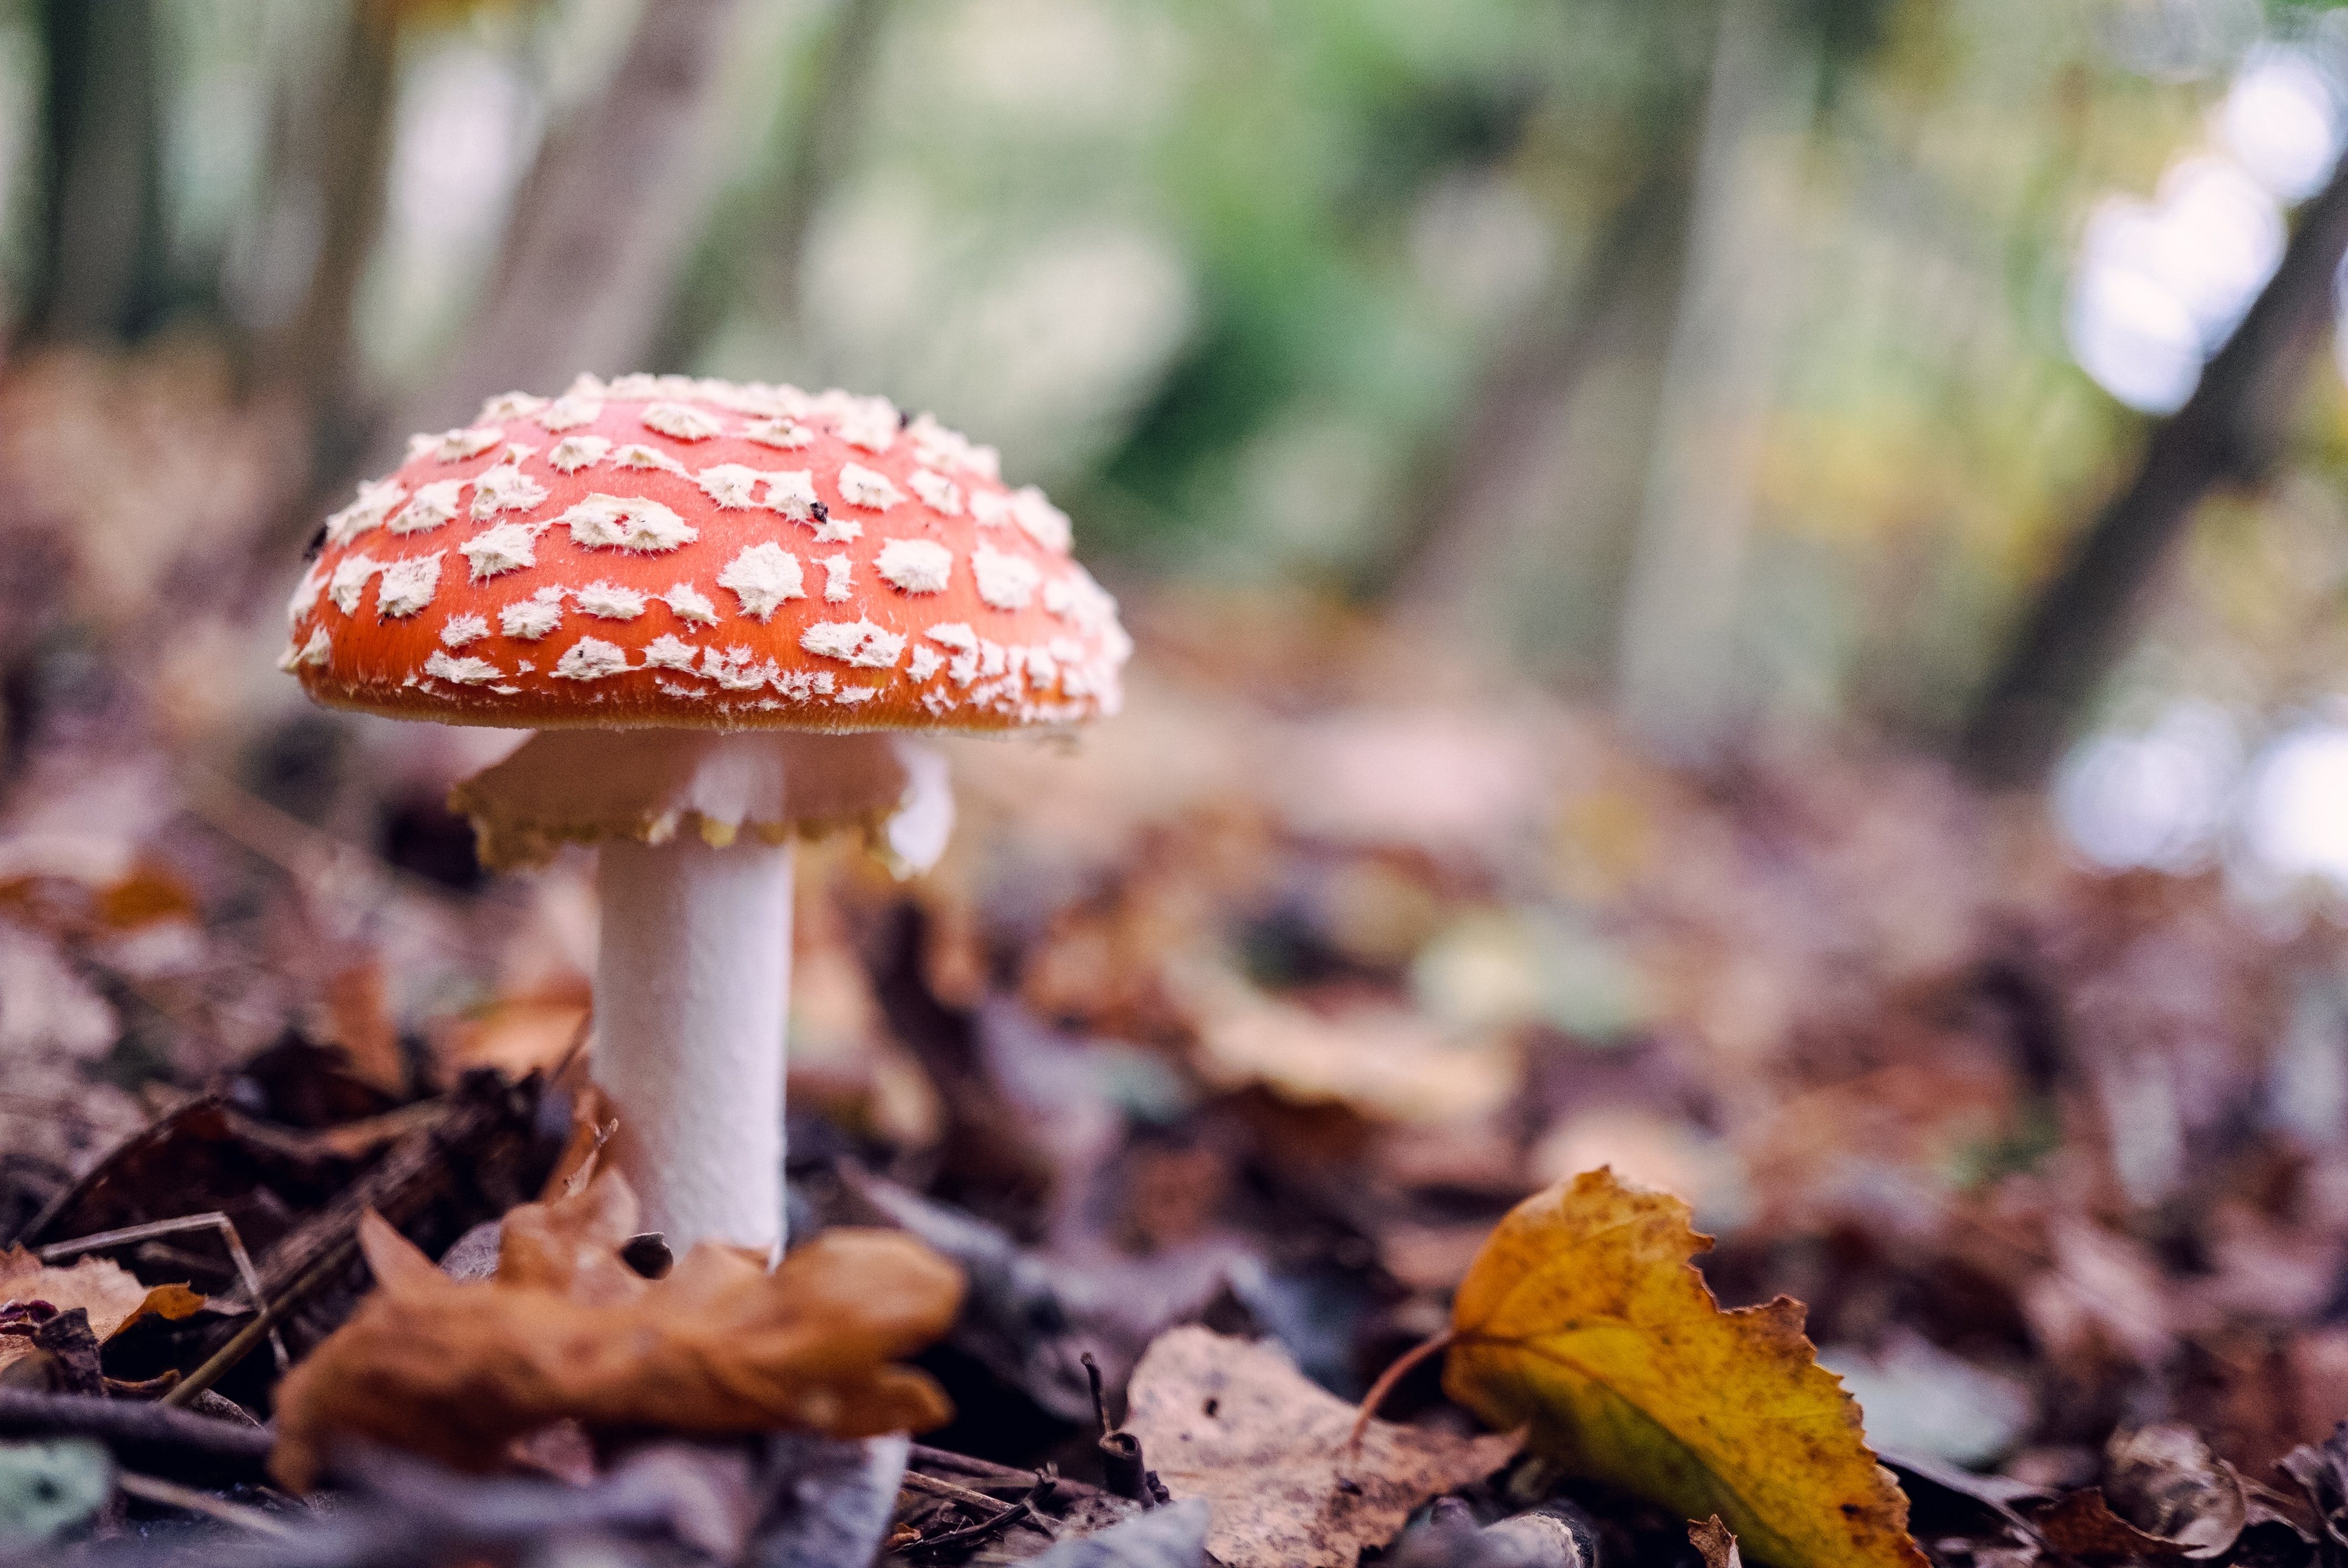 Mushroom foraging dangers under scrutiny